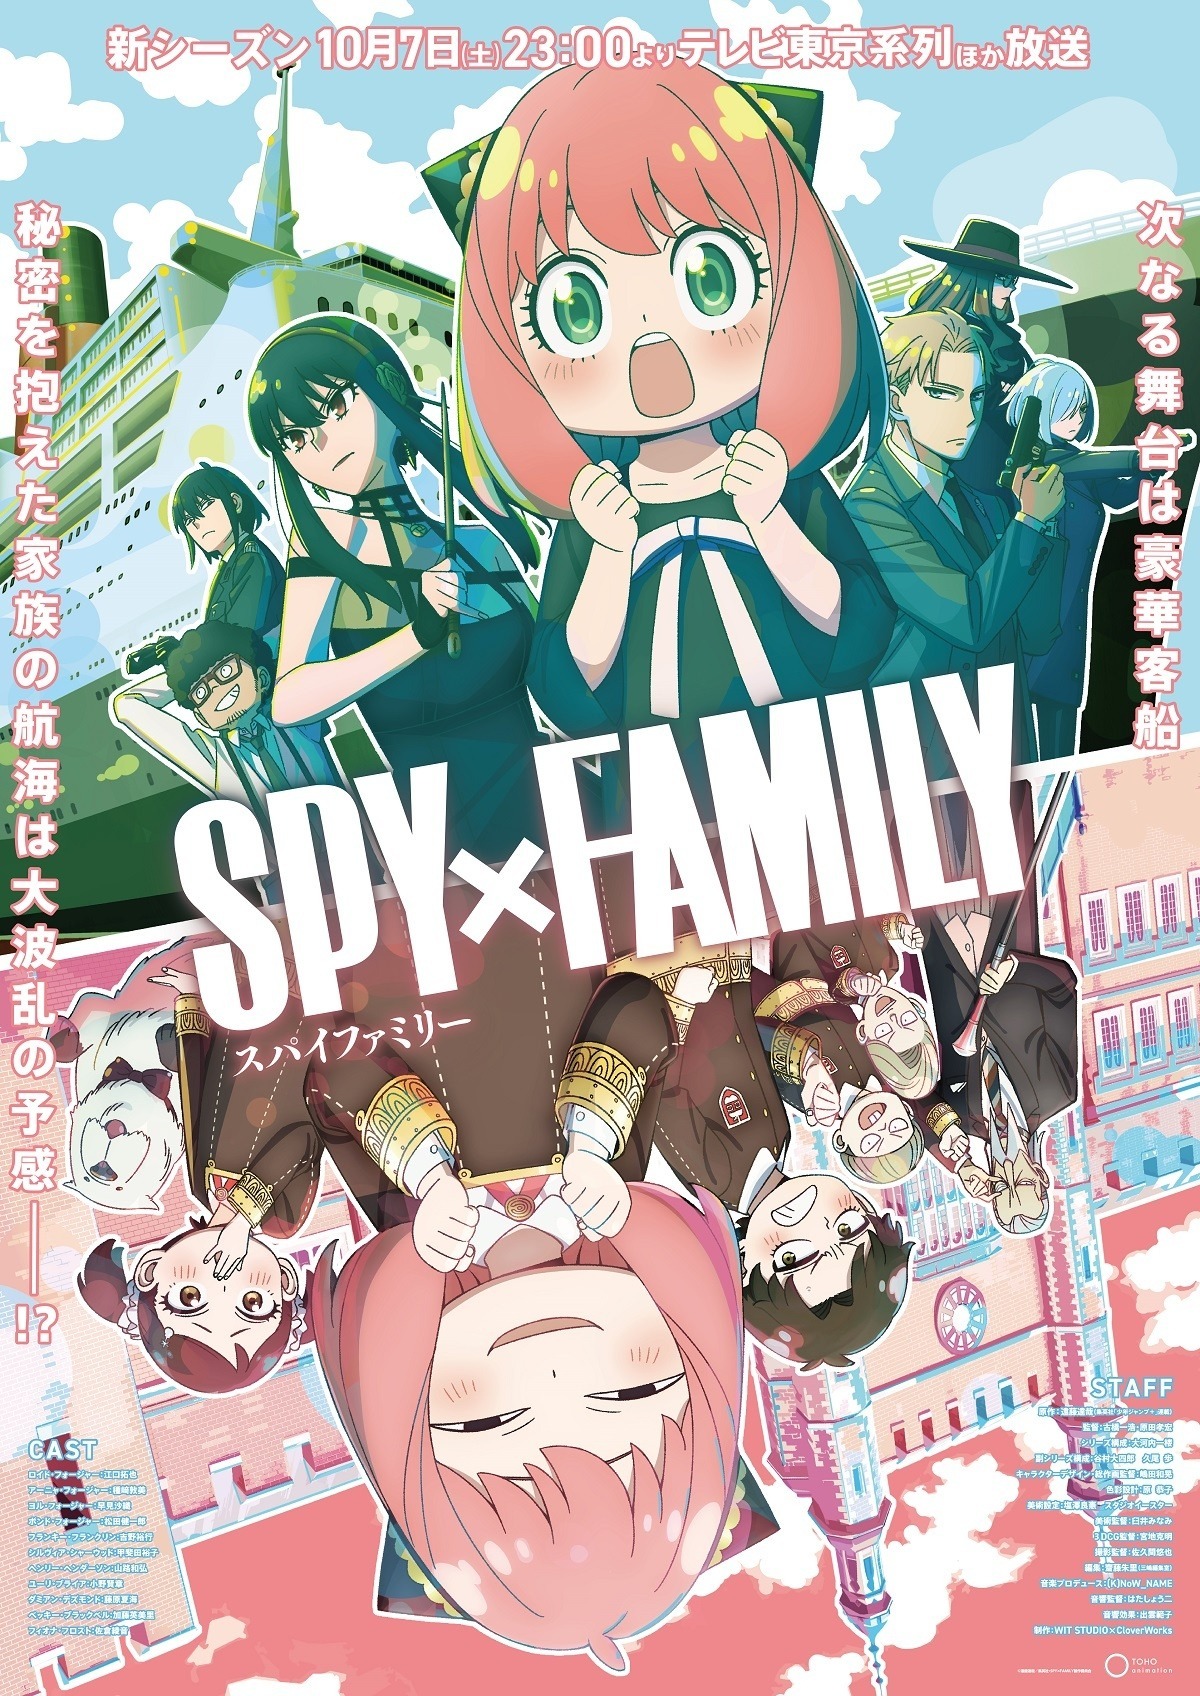 TV Anime Spy x Family 2nd Cour Shinko Music Edition 93% OFF